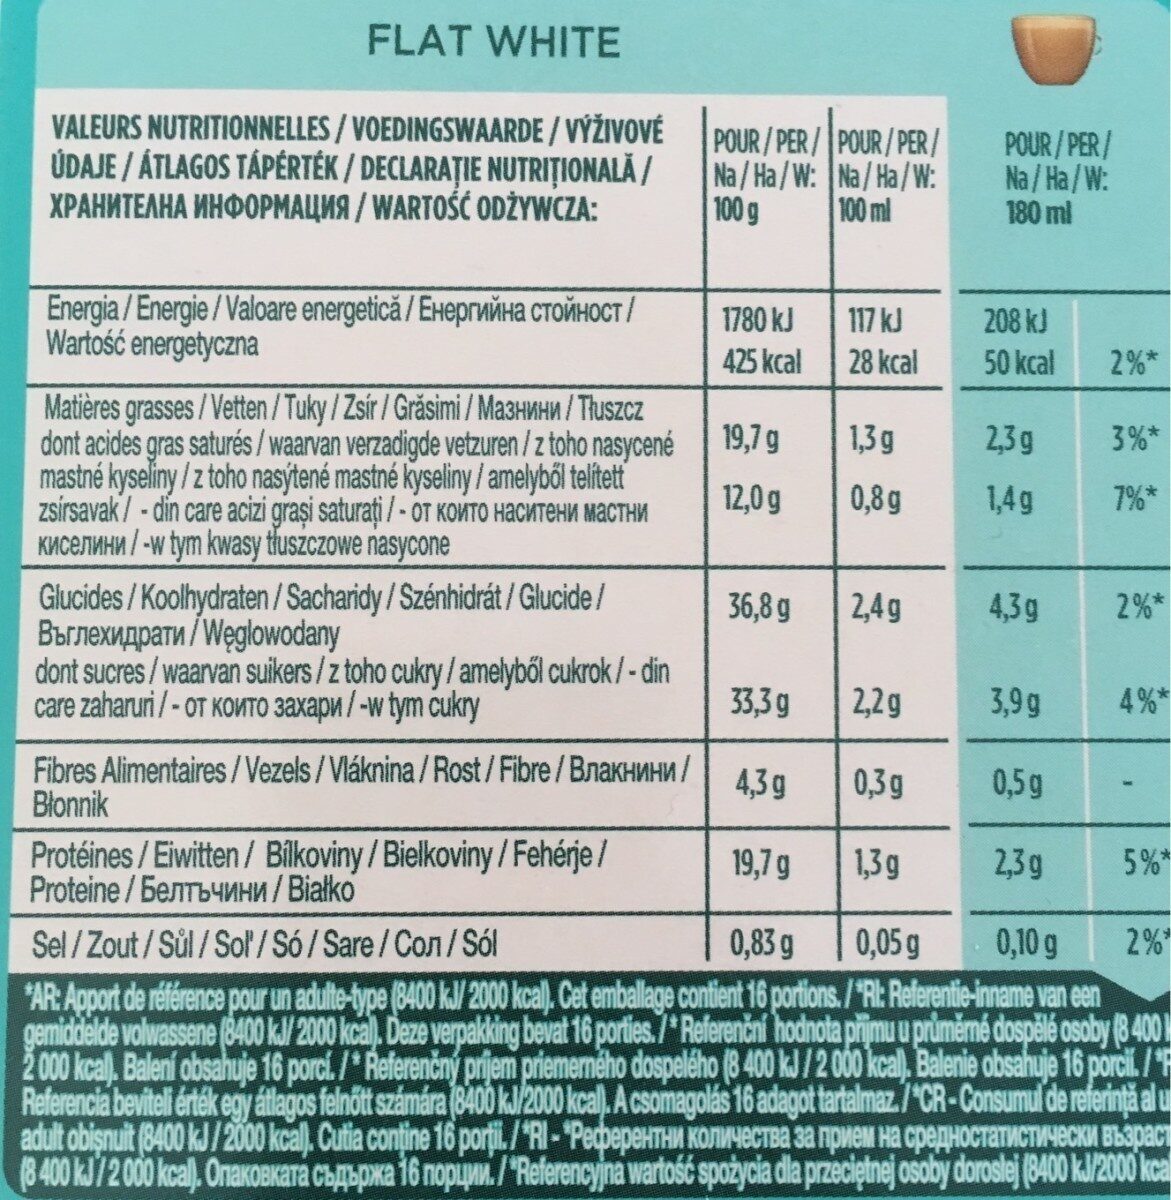 Flat White - Tableau nutritionnel